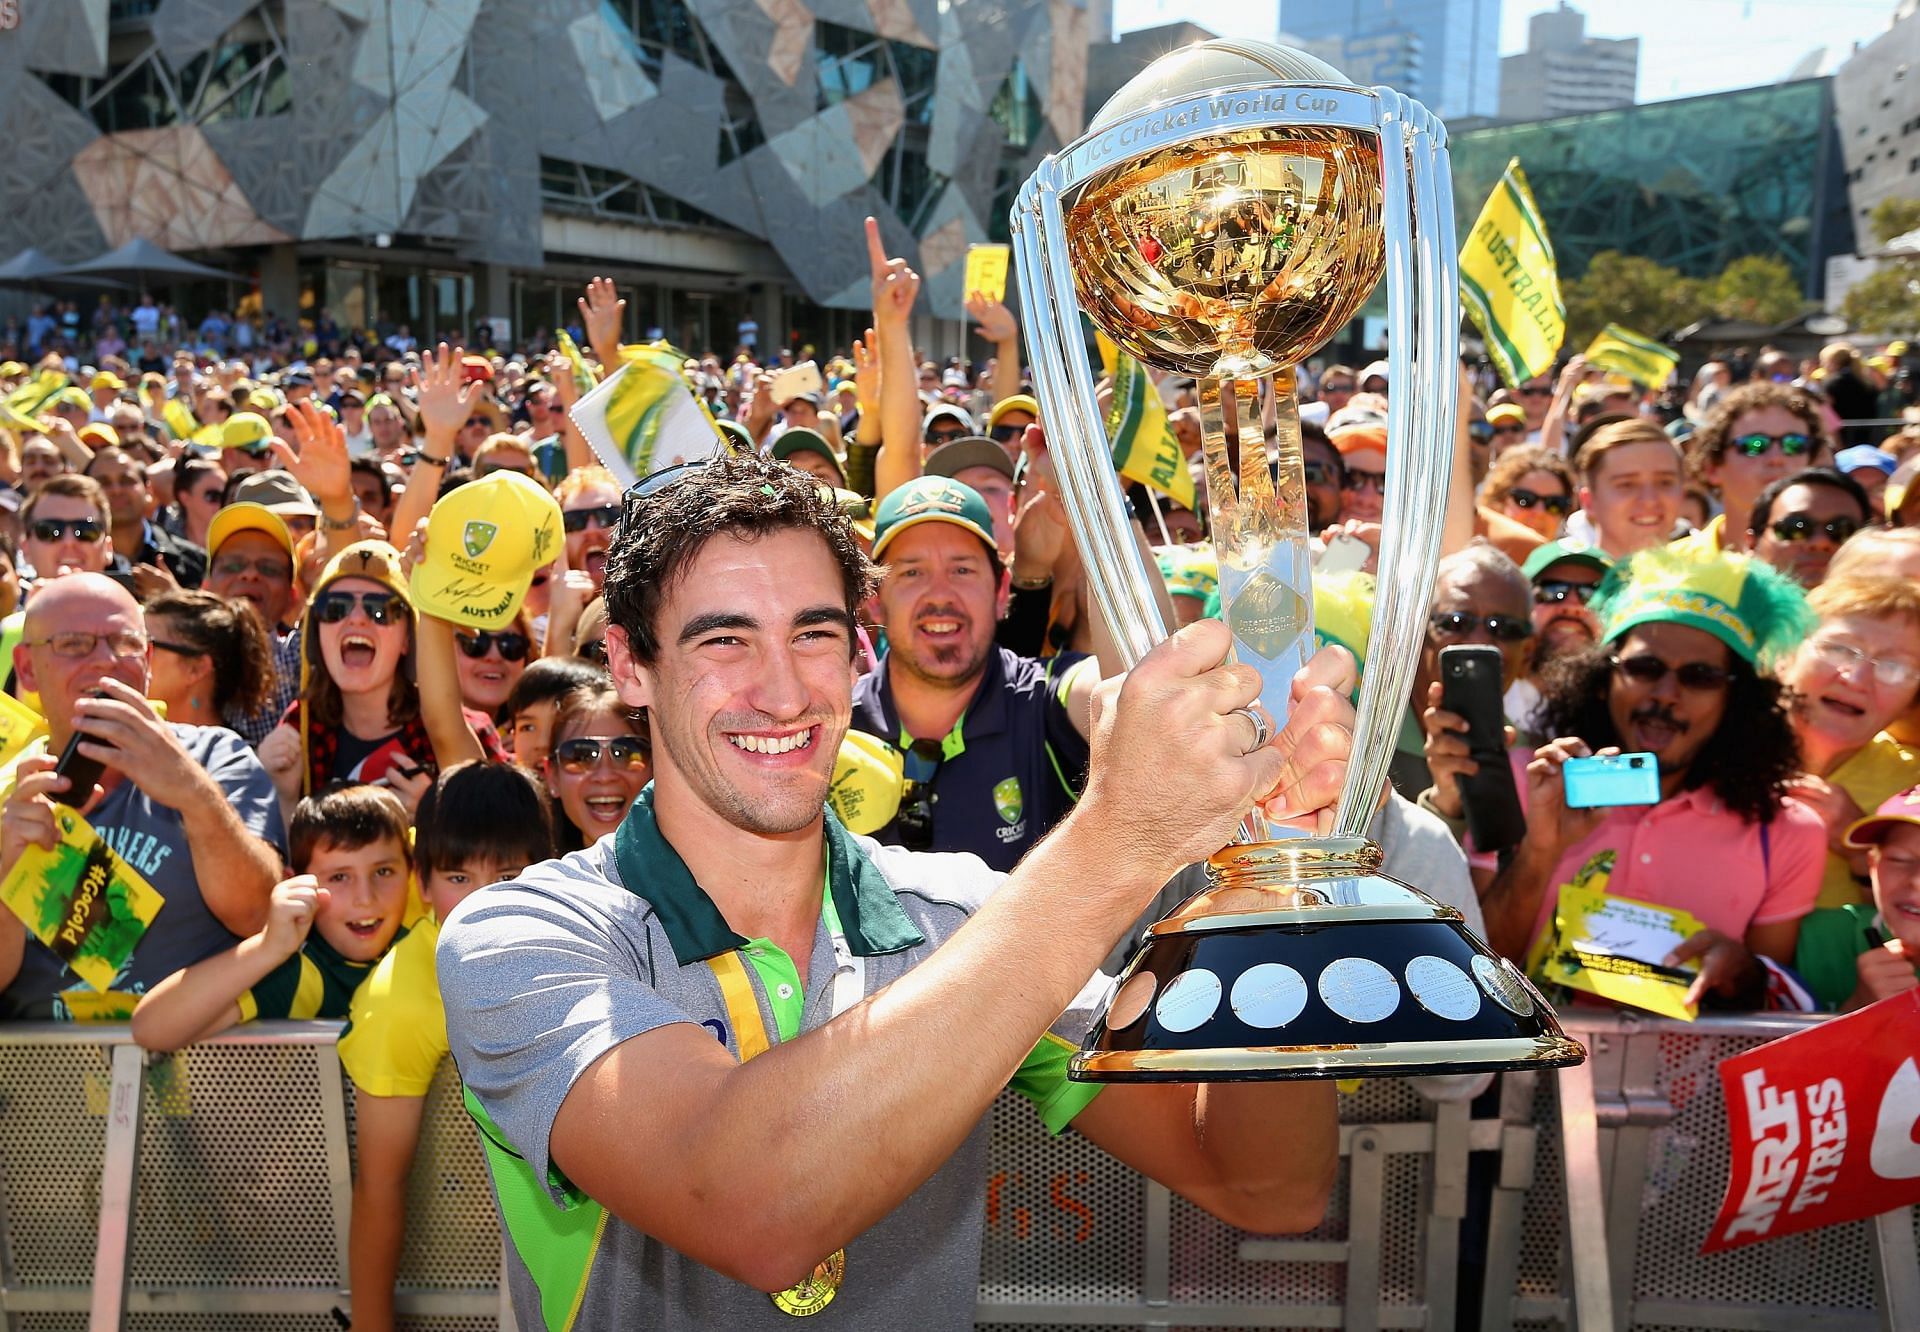 Australia Celebrate Winning 2015 ICC Cricket World Cup